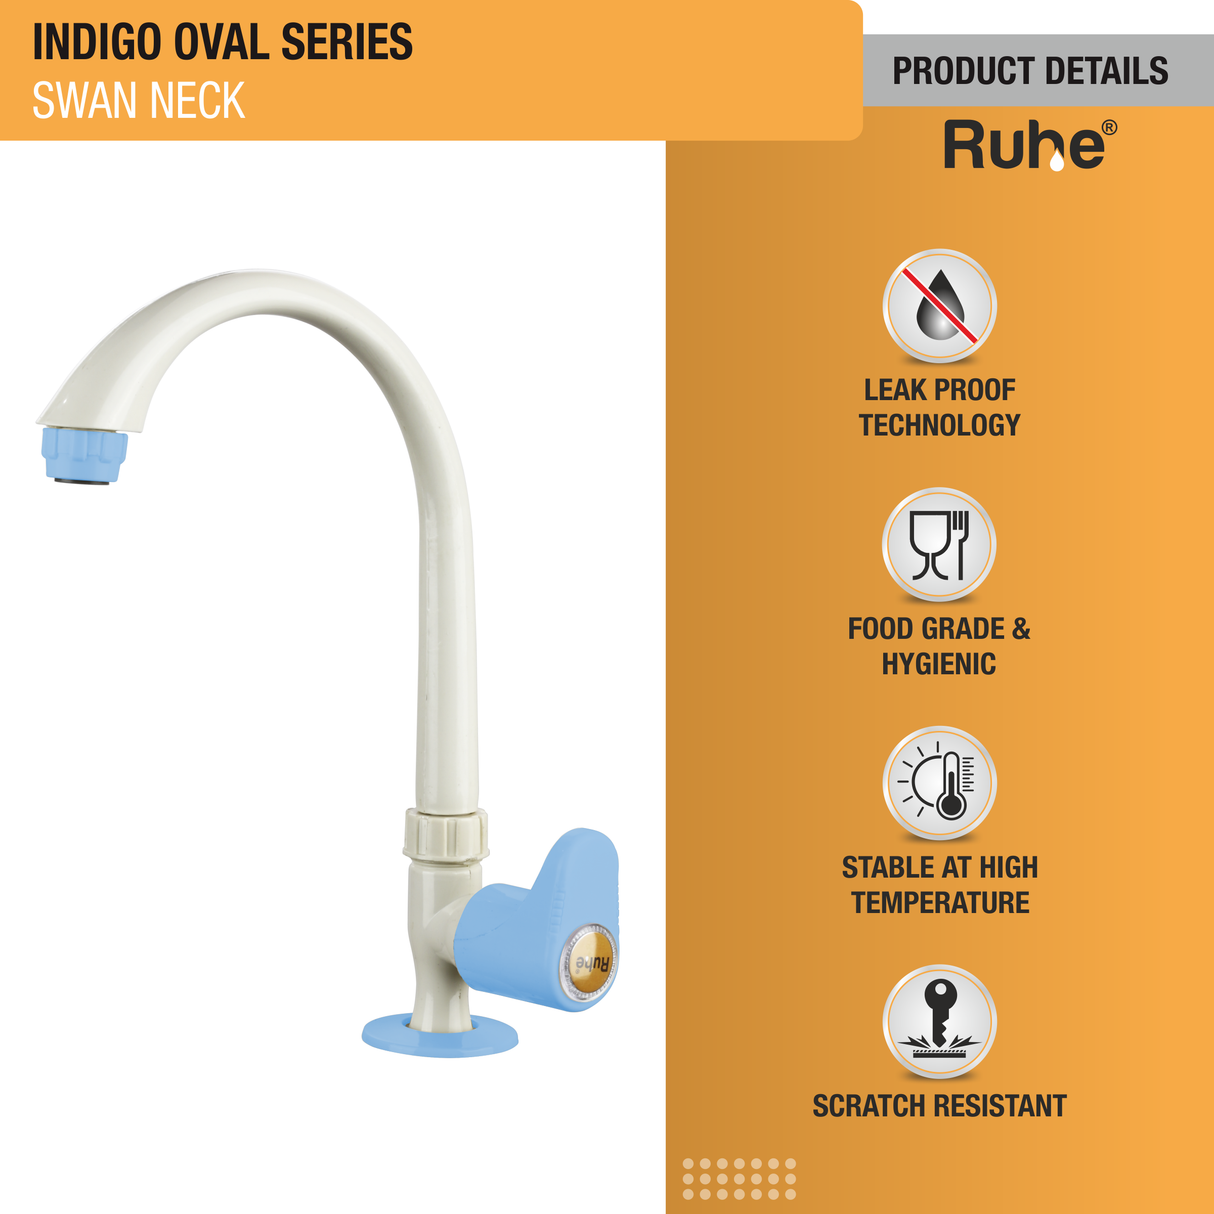 Indigo Oval PTMT Swan Neck with Swivel Spout Faucet details